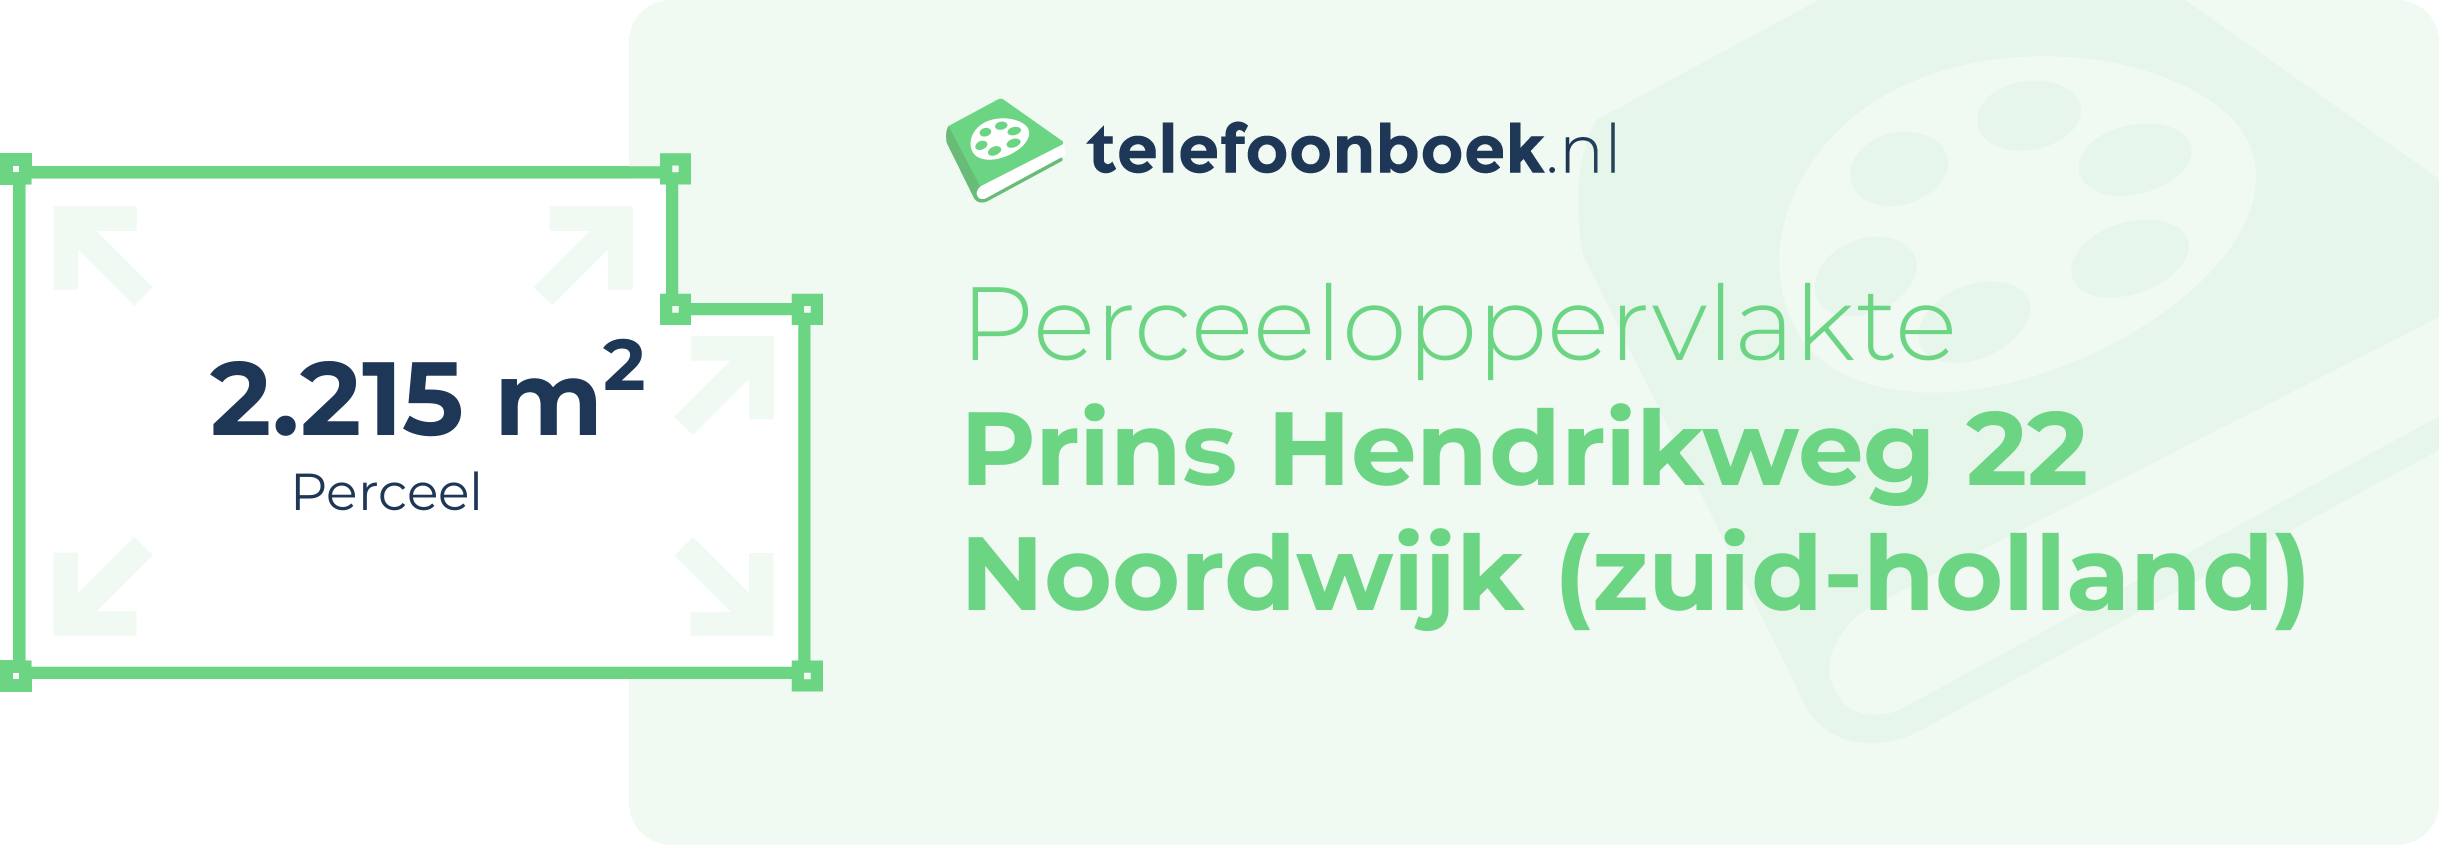 Perceeloppervlakte Prins Hendrikweg 22 Noordwijk (Zuid-Holland)